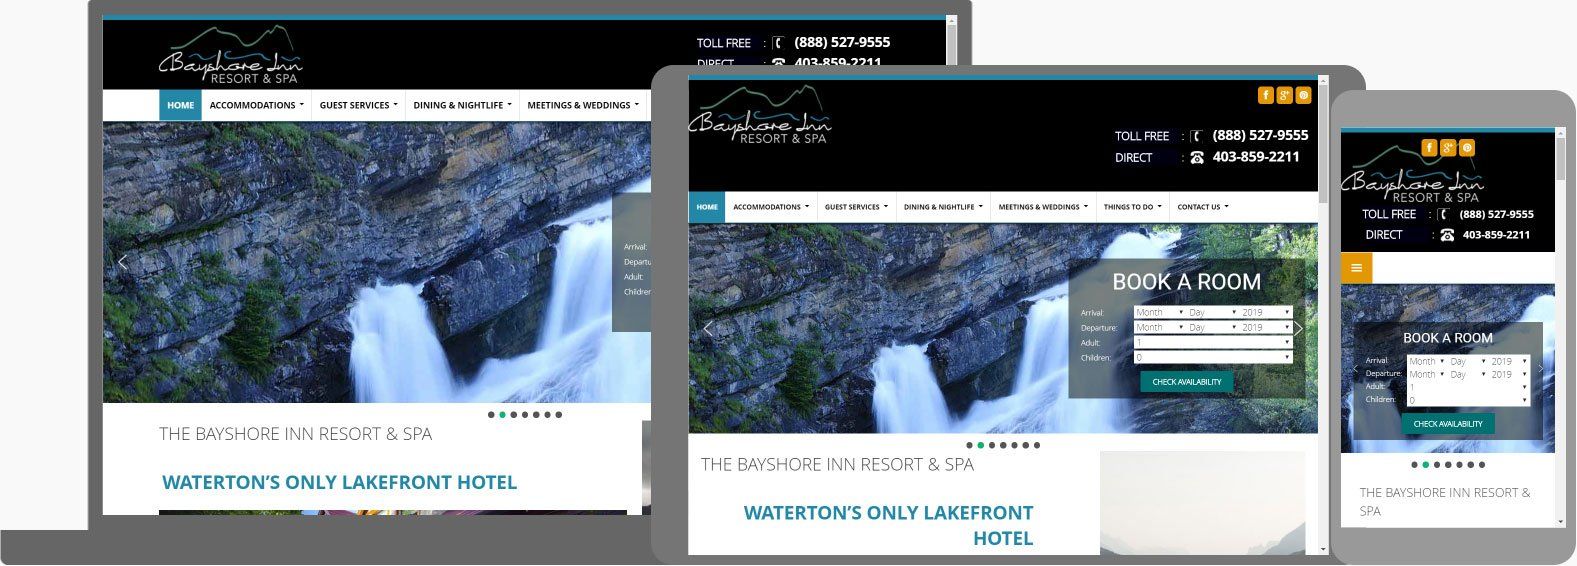 Hotel Website Design - The Bayshore Inn Resort & Spa